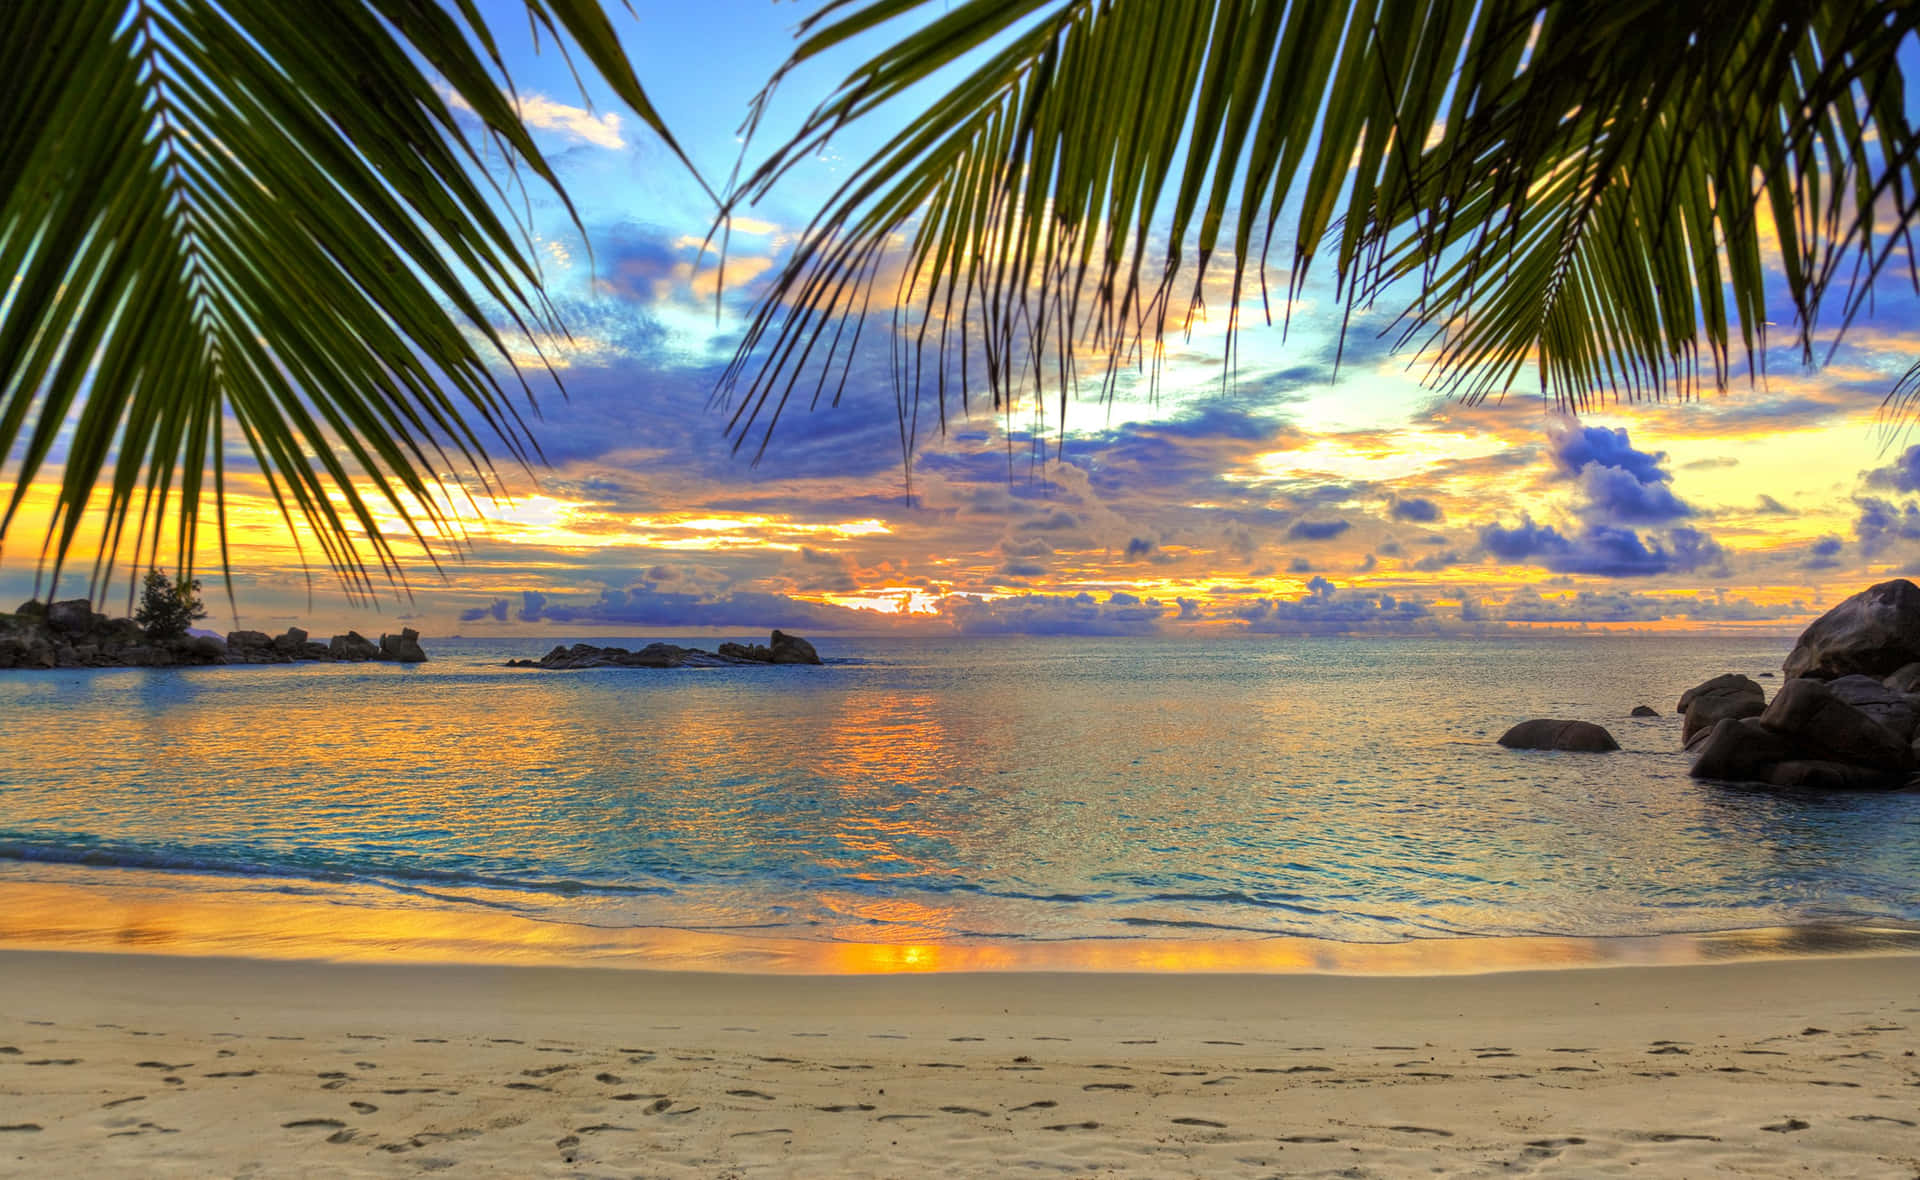 Feel the Caribbean breeze on this beautiful beach